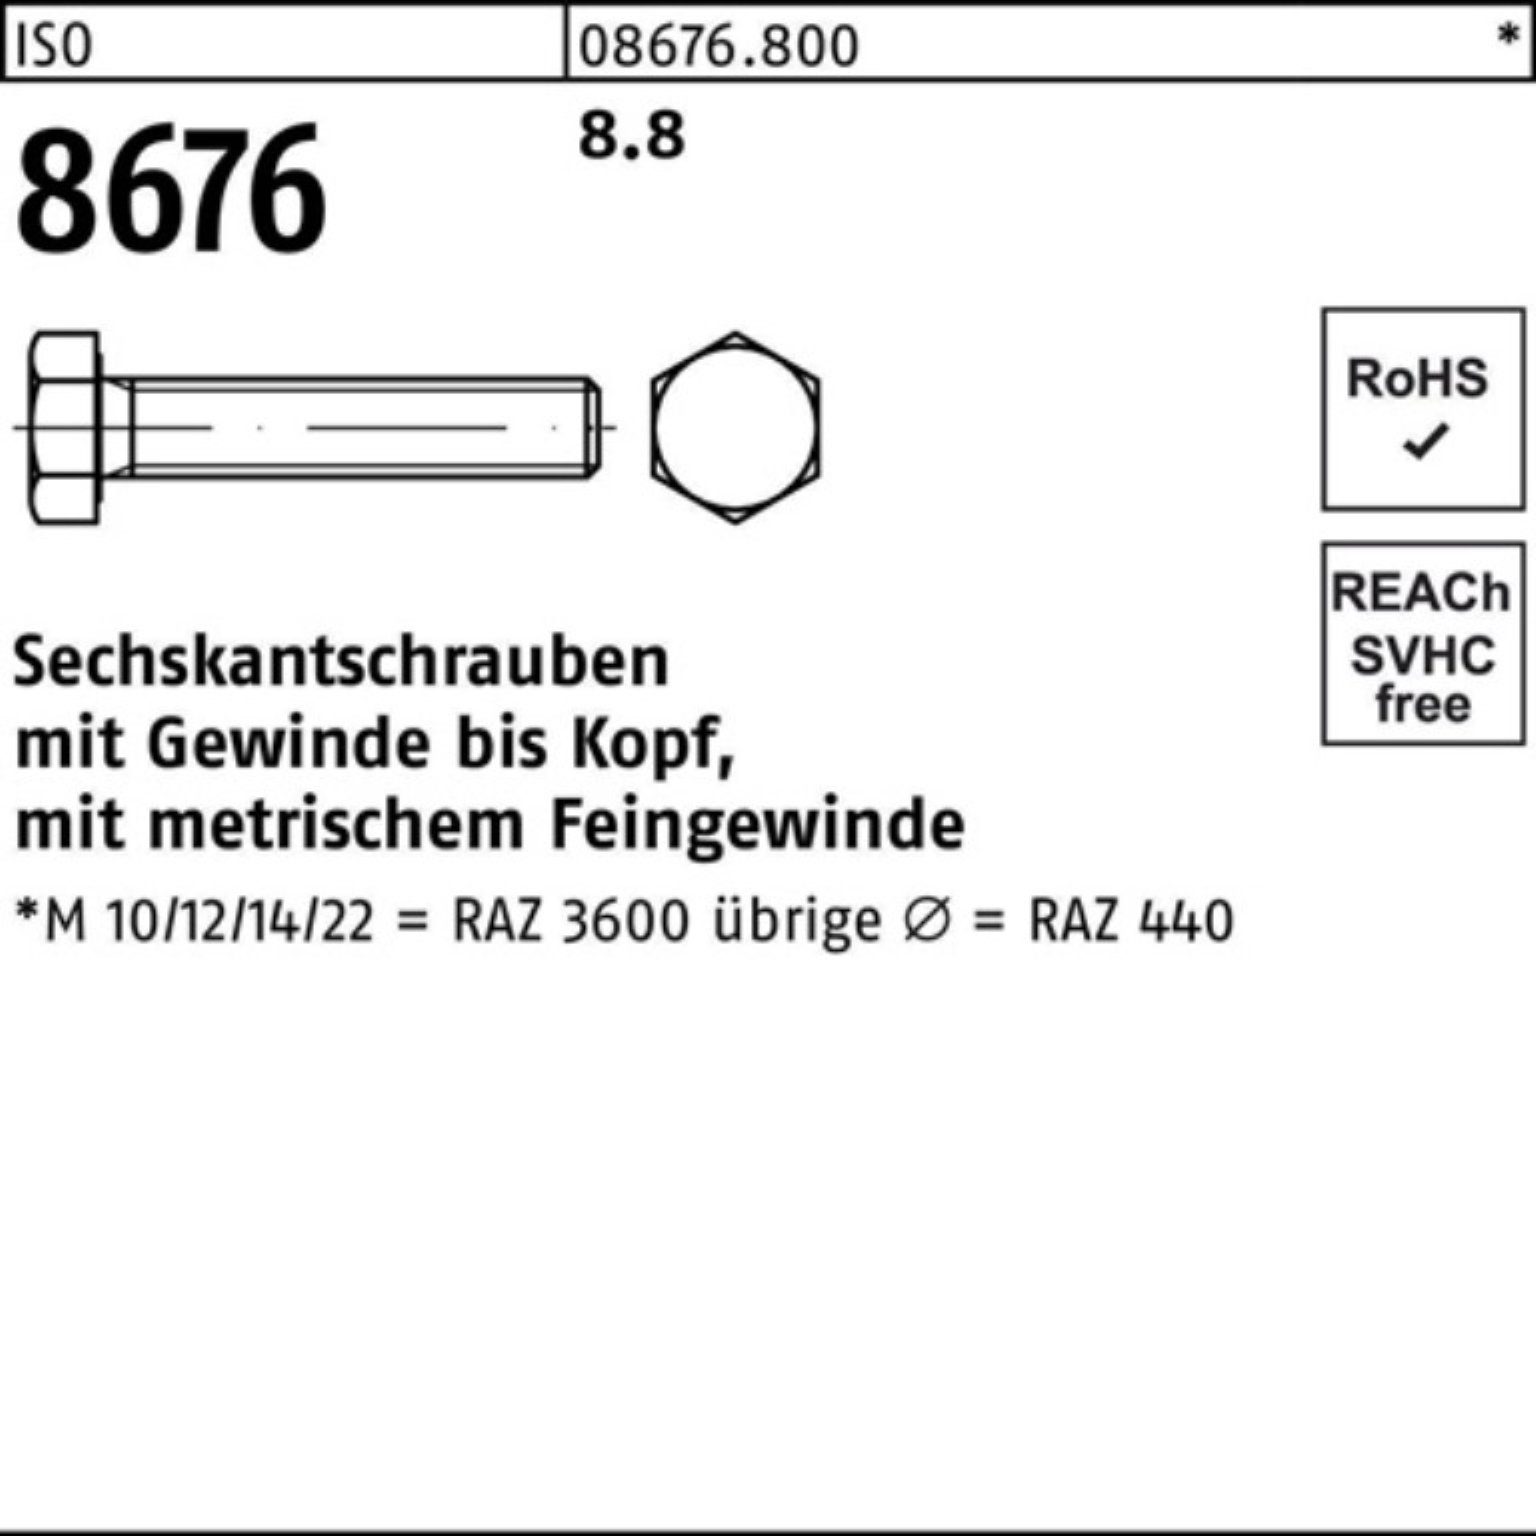 Sechskantschraube VG ISO 100er M30x2x 1 Reyher Sechskantschraube 8676 86 8.8 ISO 60 Stück Pack